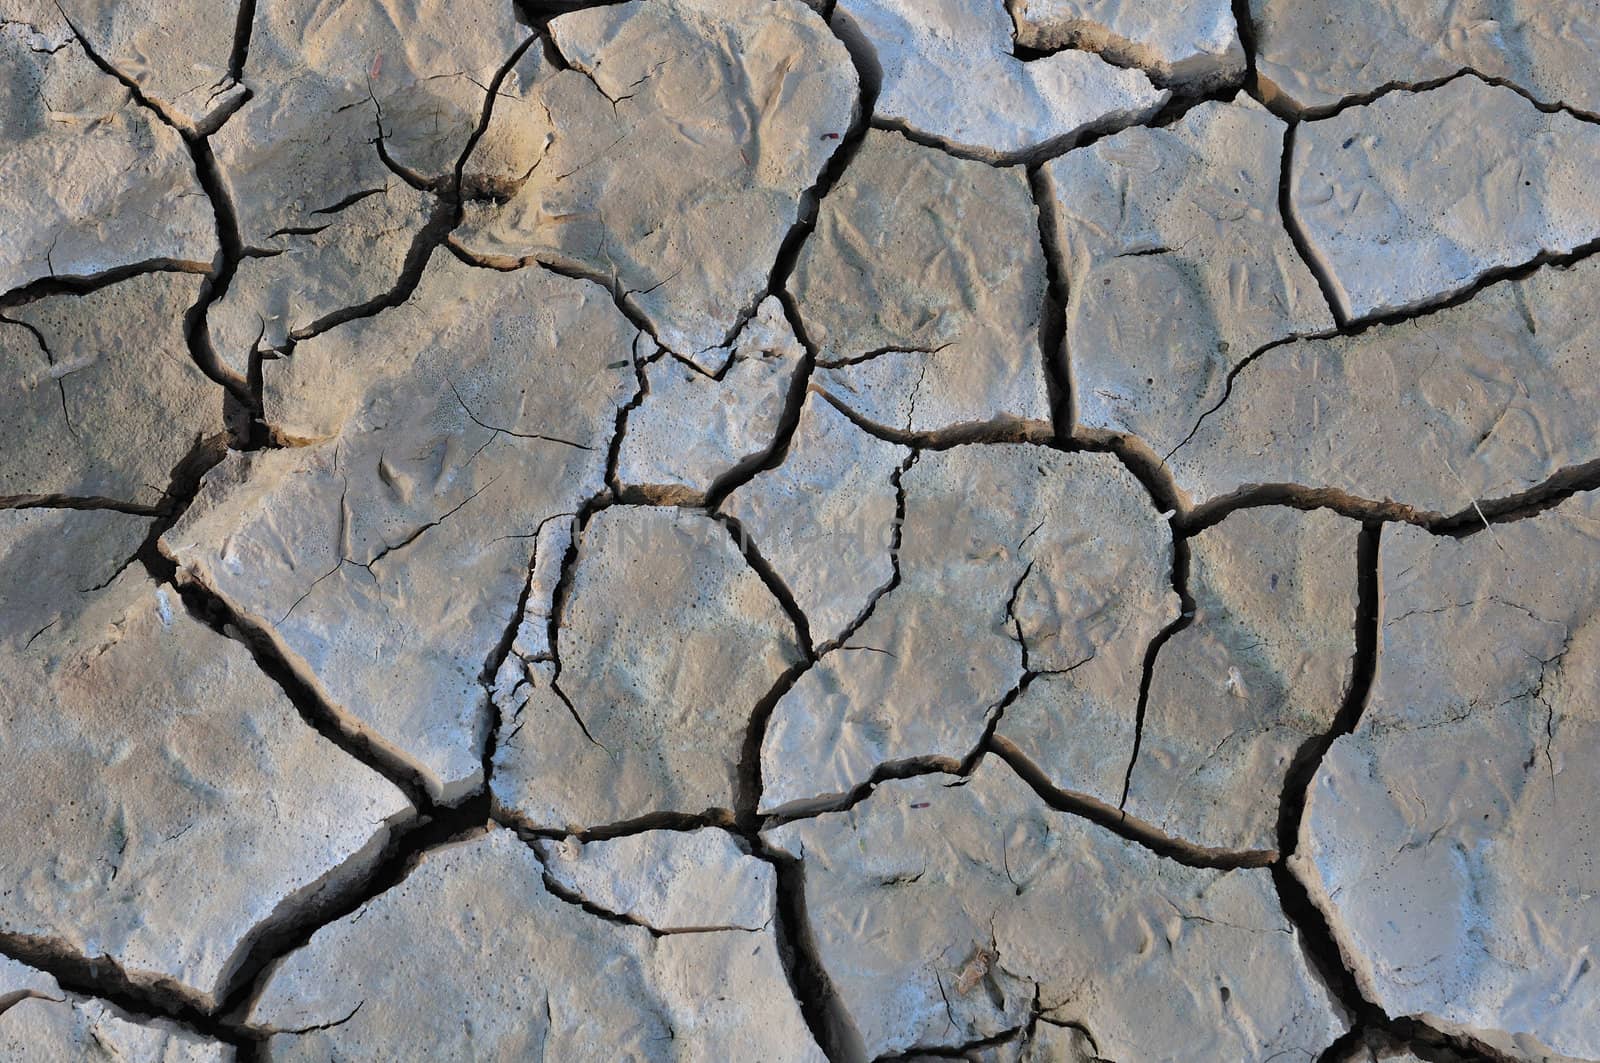 Cracked mud at Sossusvlei, Namibia by dpreezg